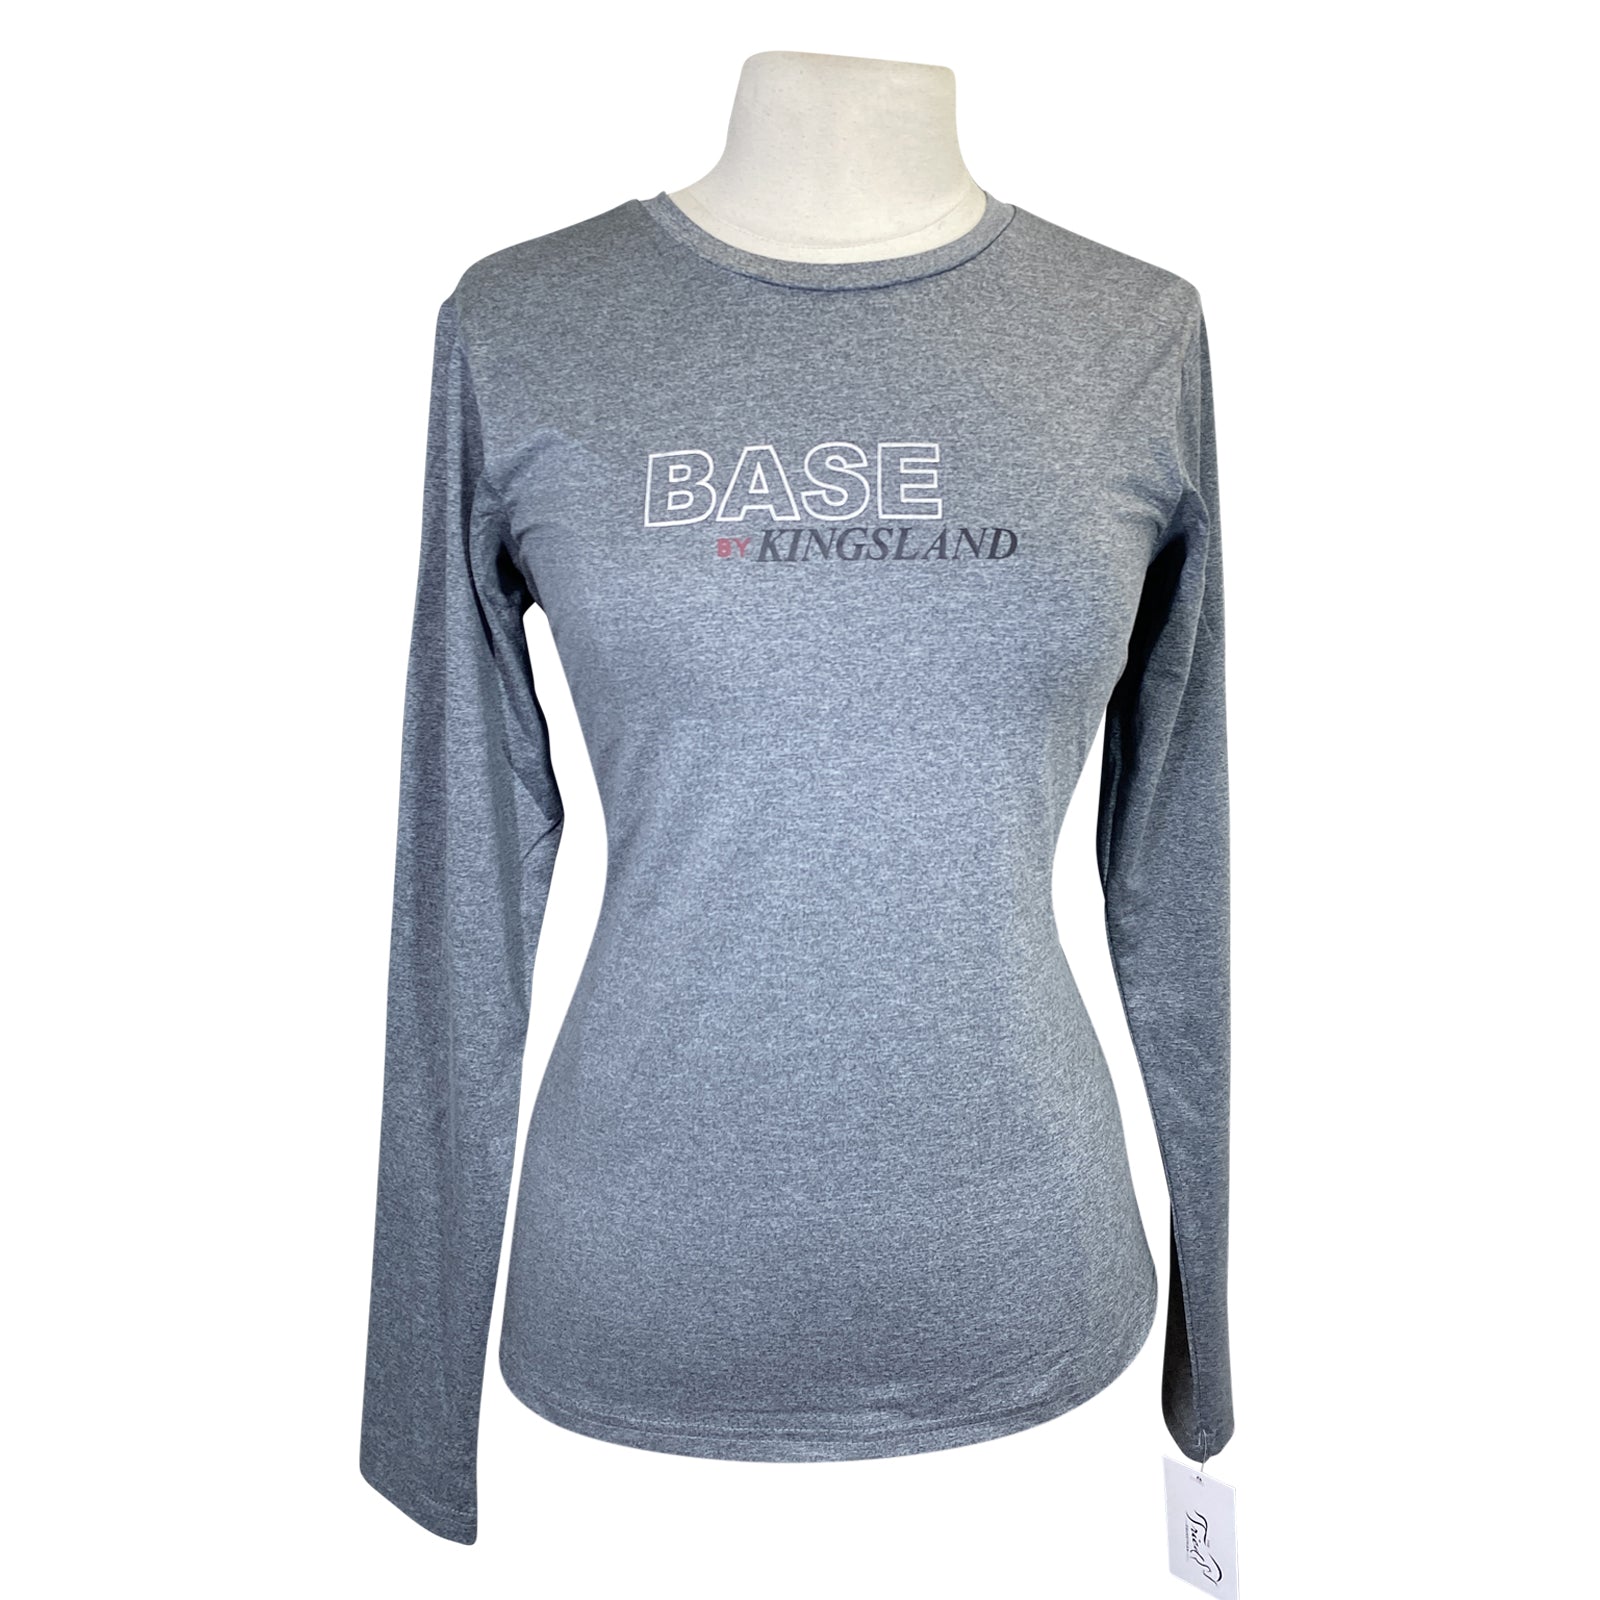 Base by Kingsland 'Mazie' Shirt in Heather GreyMedium